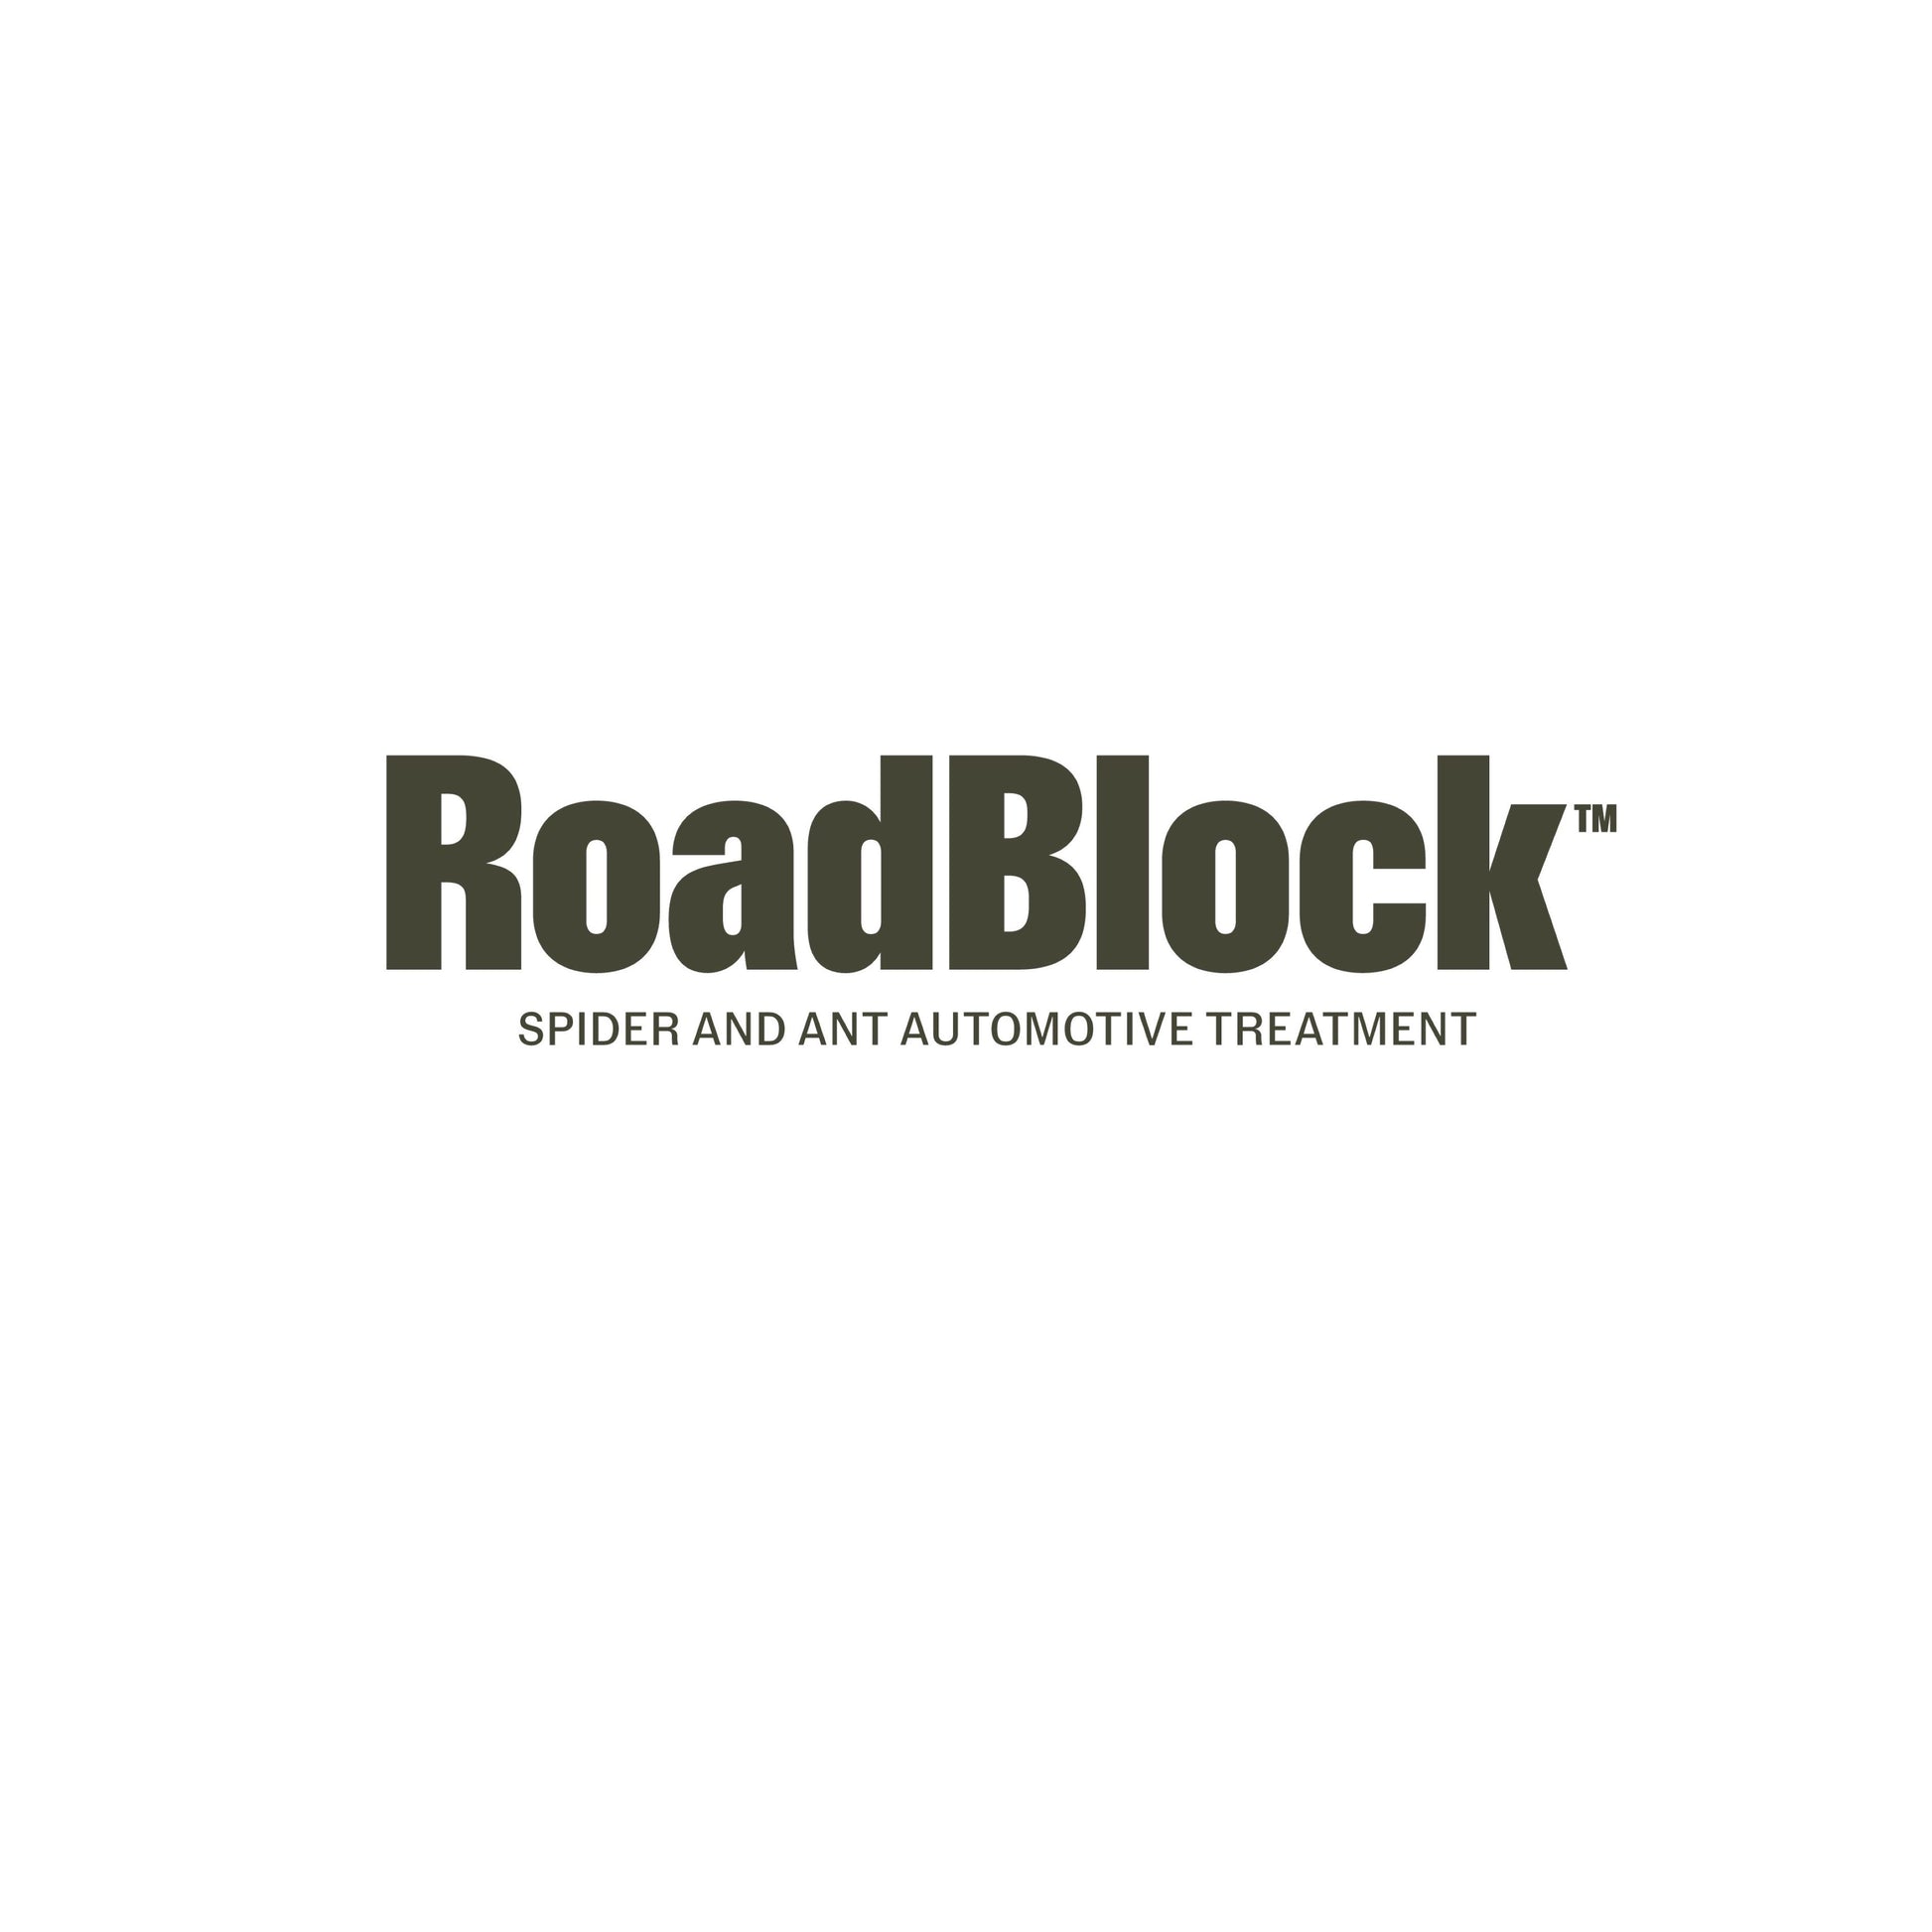 roadblock spray logo on a white background